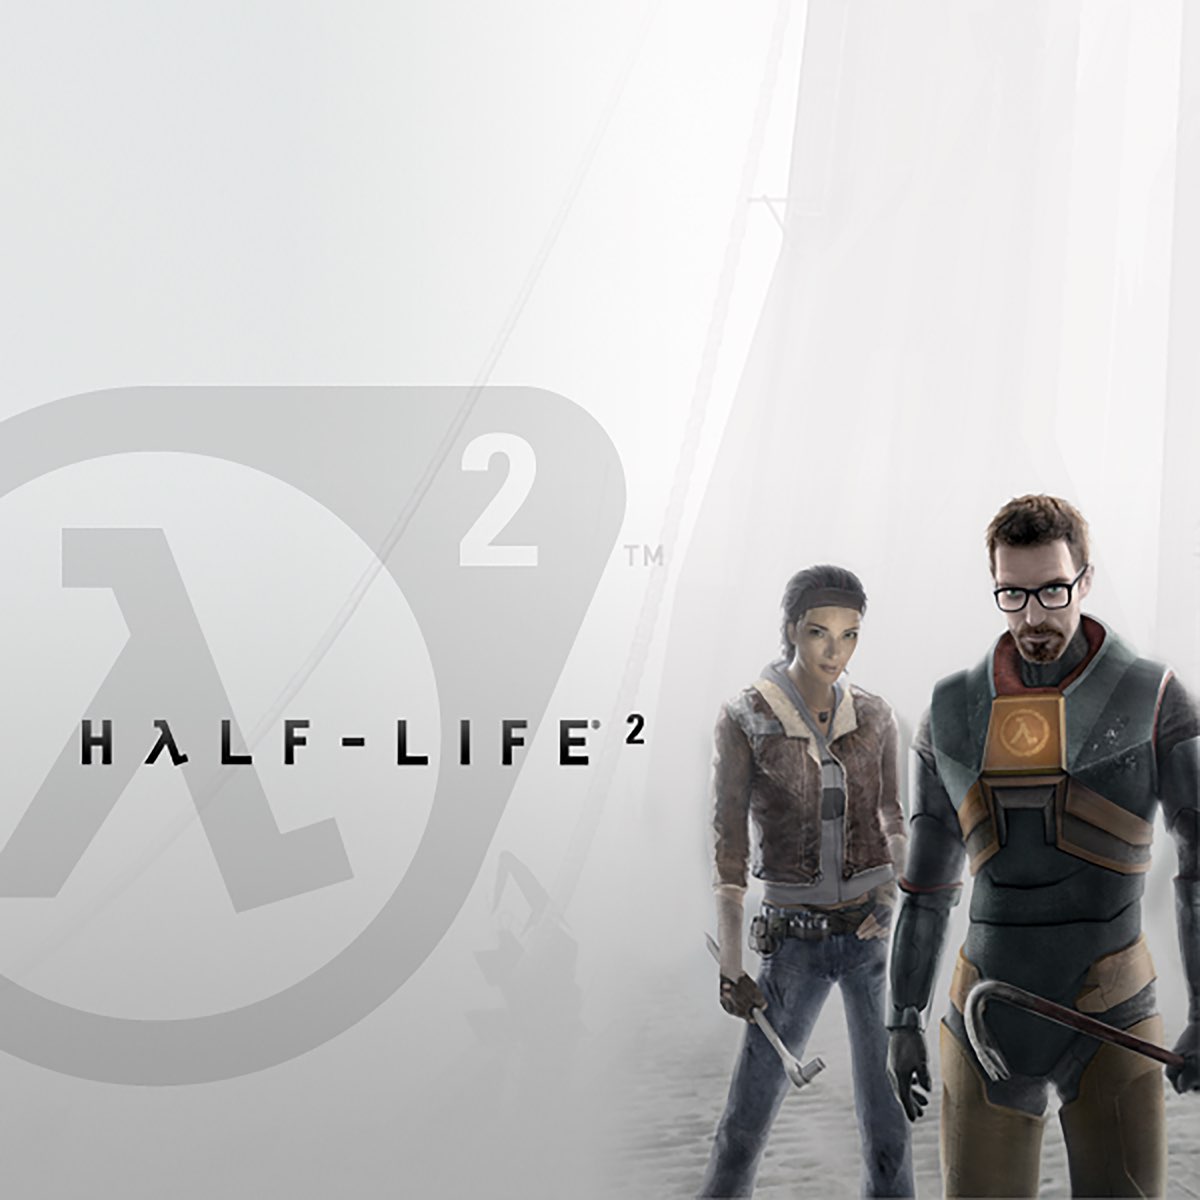 ‎Half-Life 2 (Original Game Soundtrack) by Valve on Apple Music